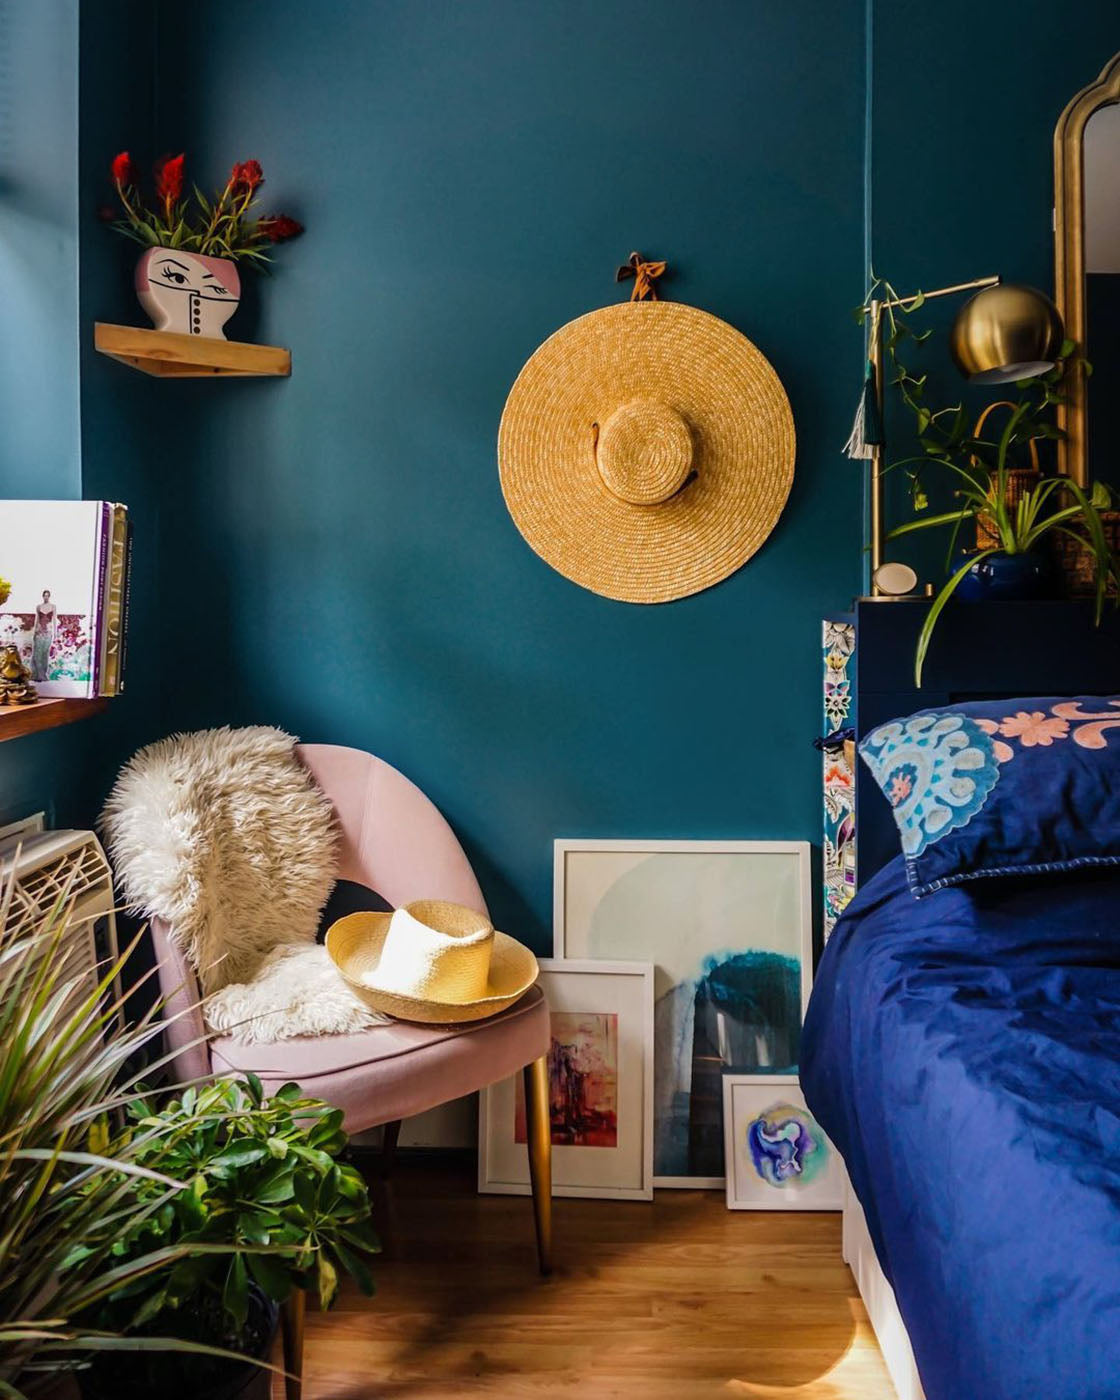 Decor Ideas for a Cozy Home | Clare